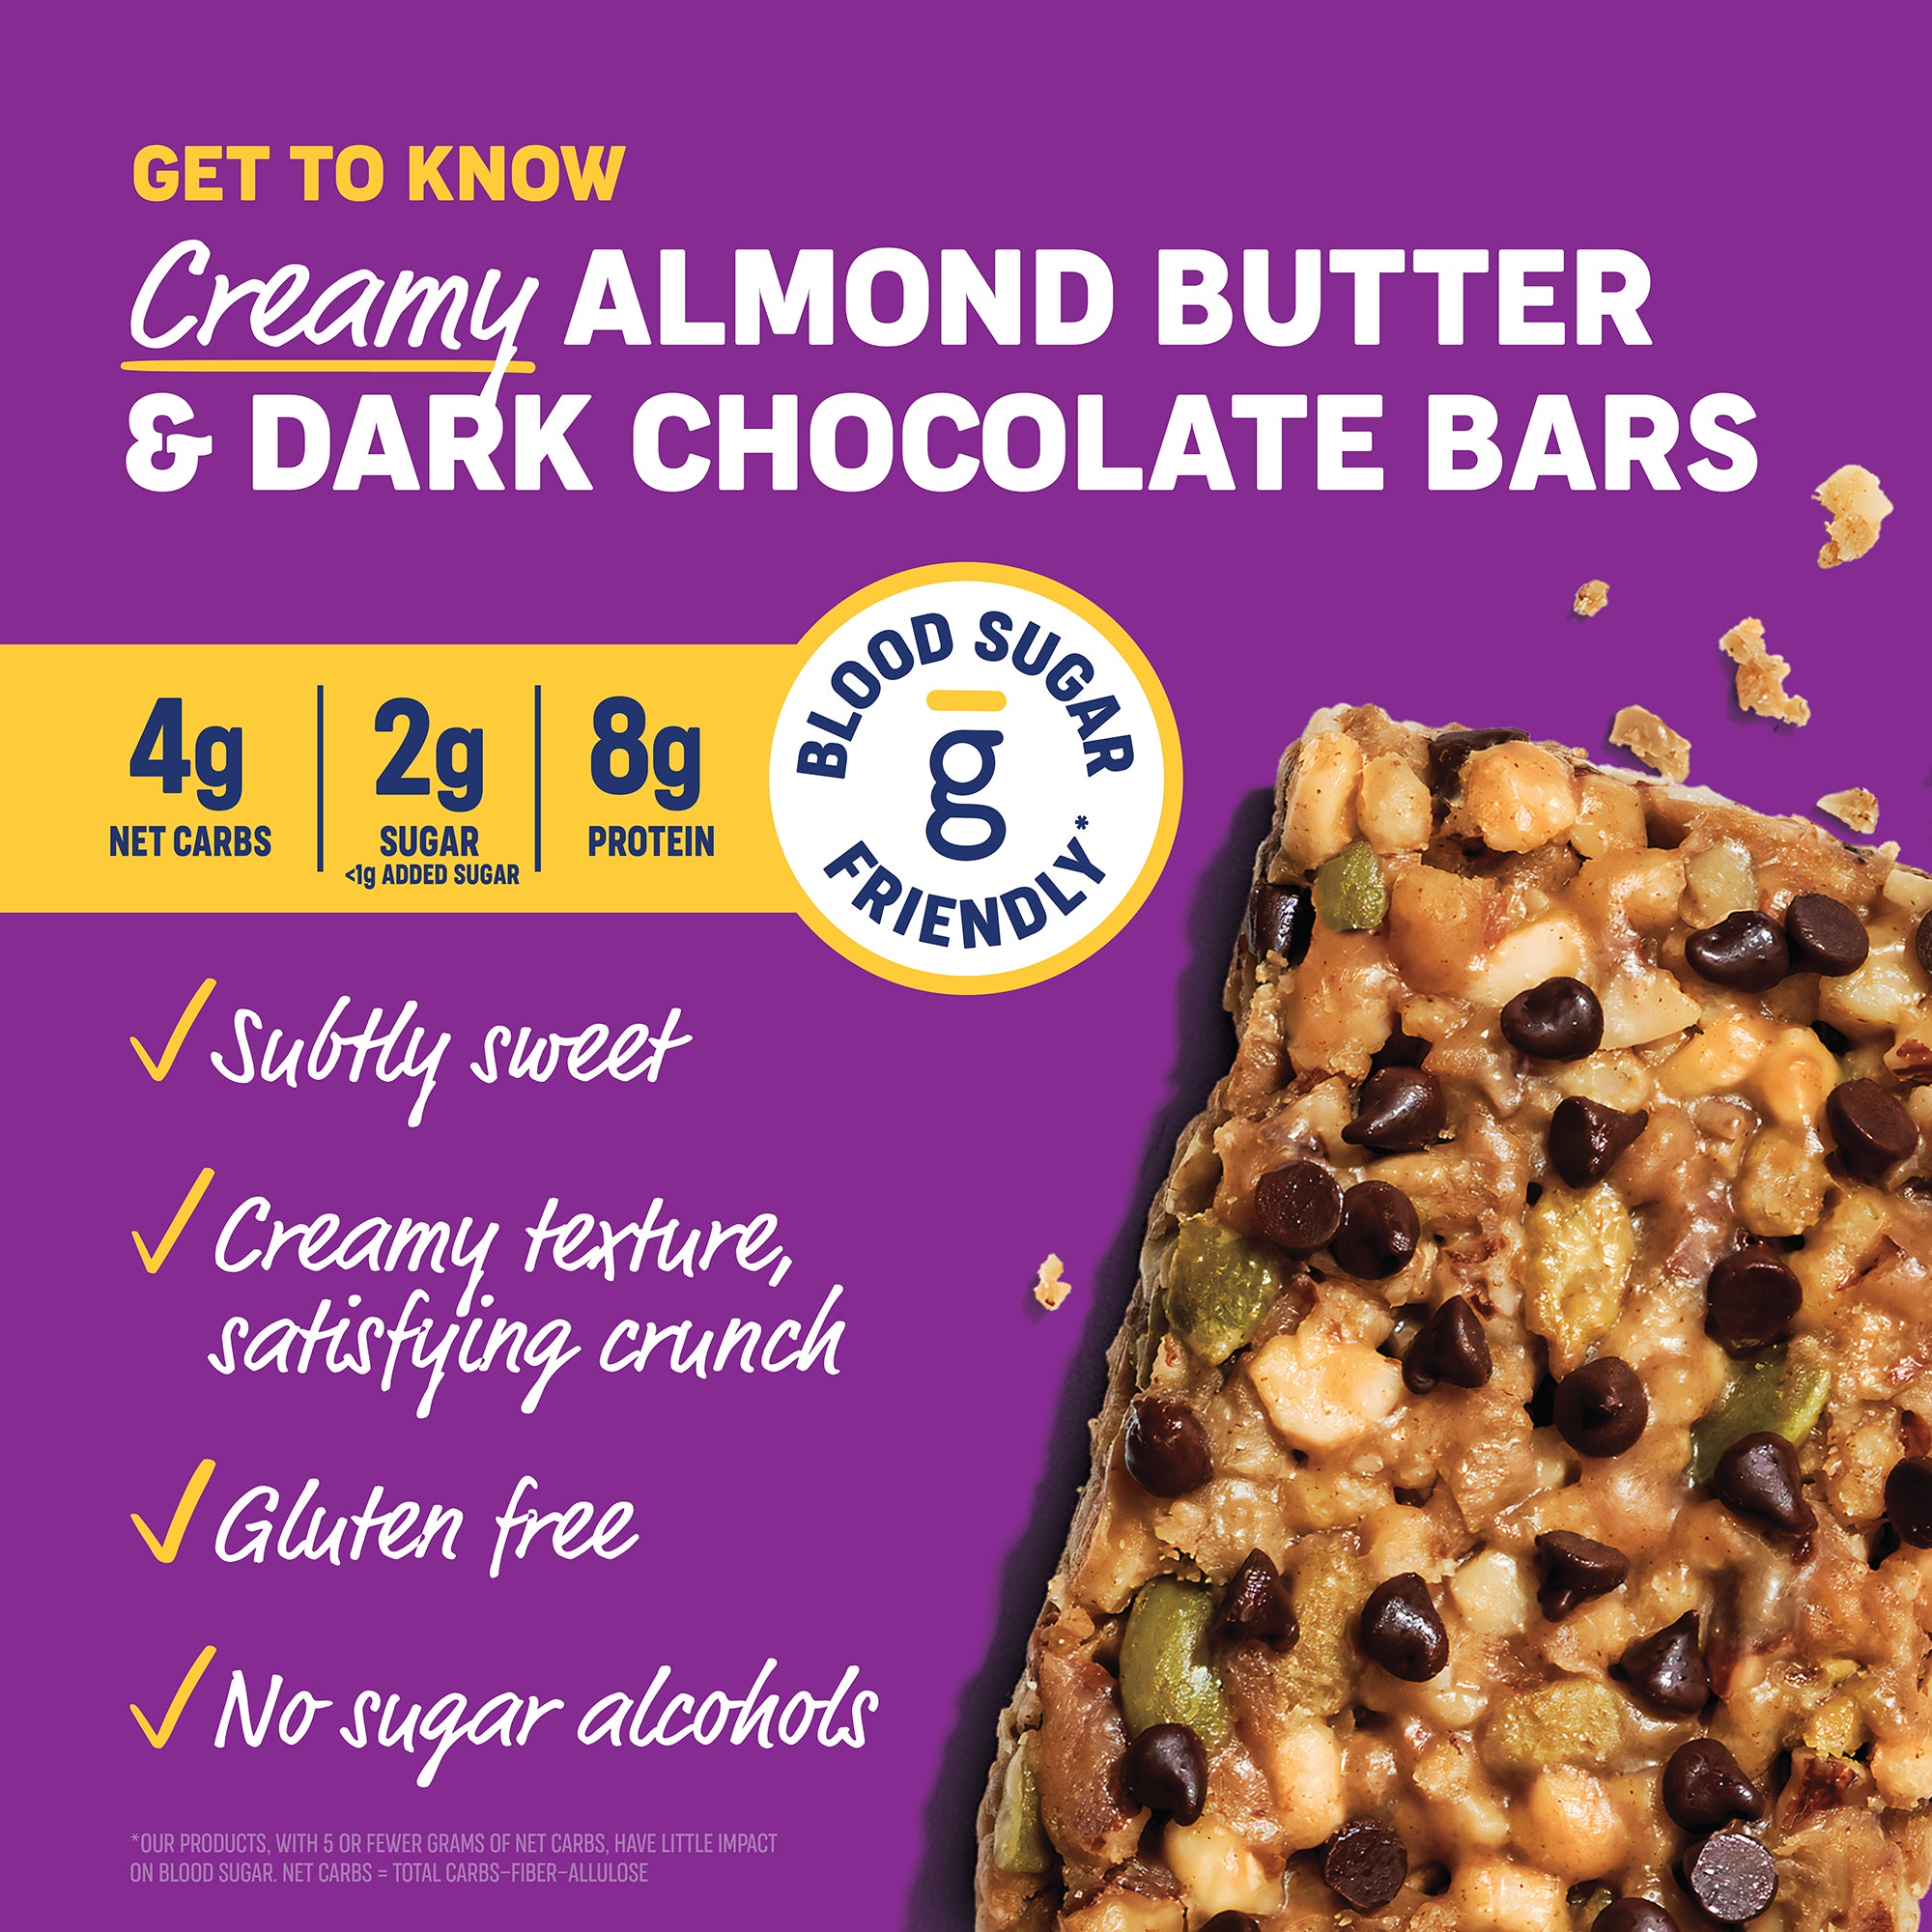 Thumnbail 3 of 6, description: Almond Butter & Dark Chocolate